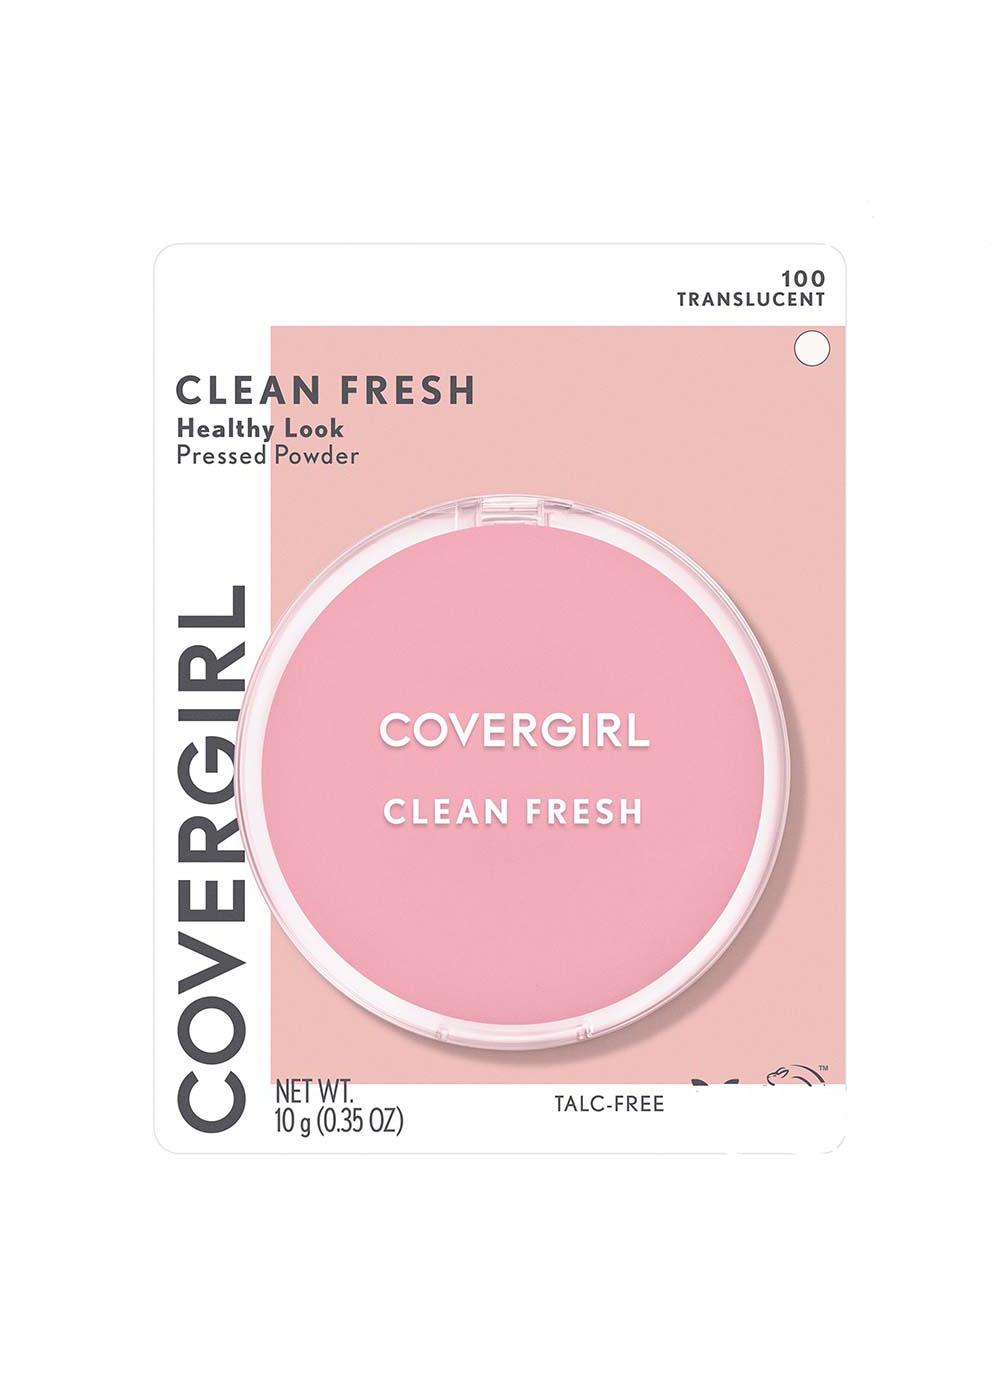 Covergirl Clean Fresh Pressed Powder 100 Translucent; image 1 of 7